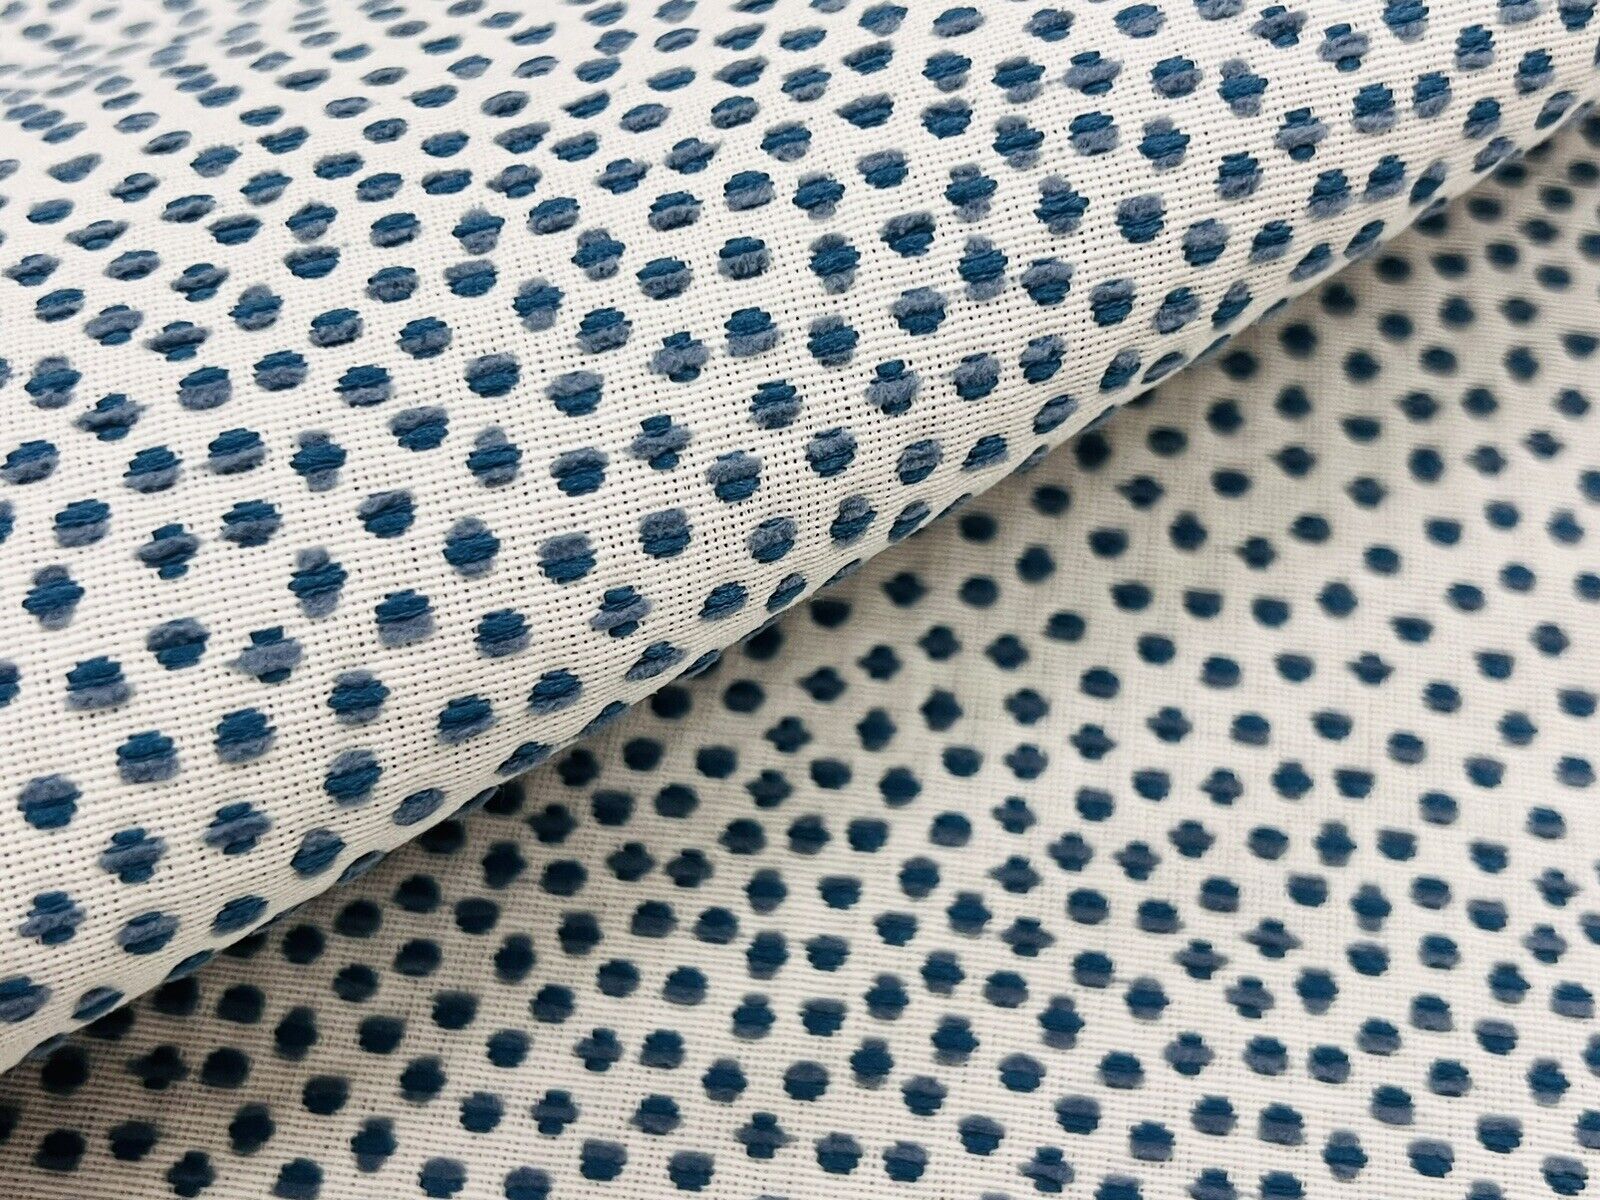 Kravet Blue All Over Raised Chenille Dots Crypton Uphol Fabric 4.65 yds 34710-5